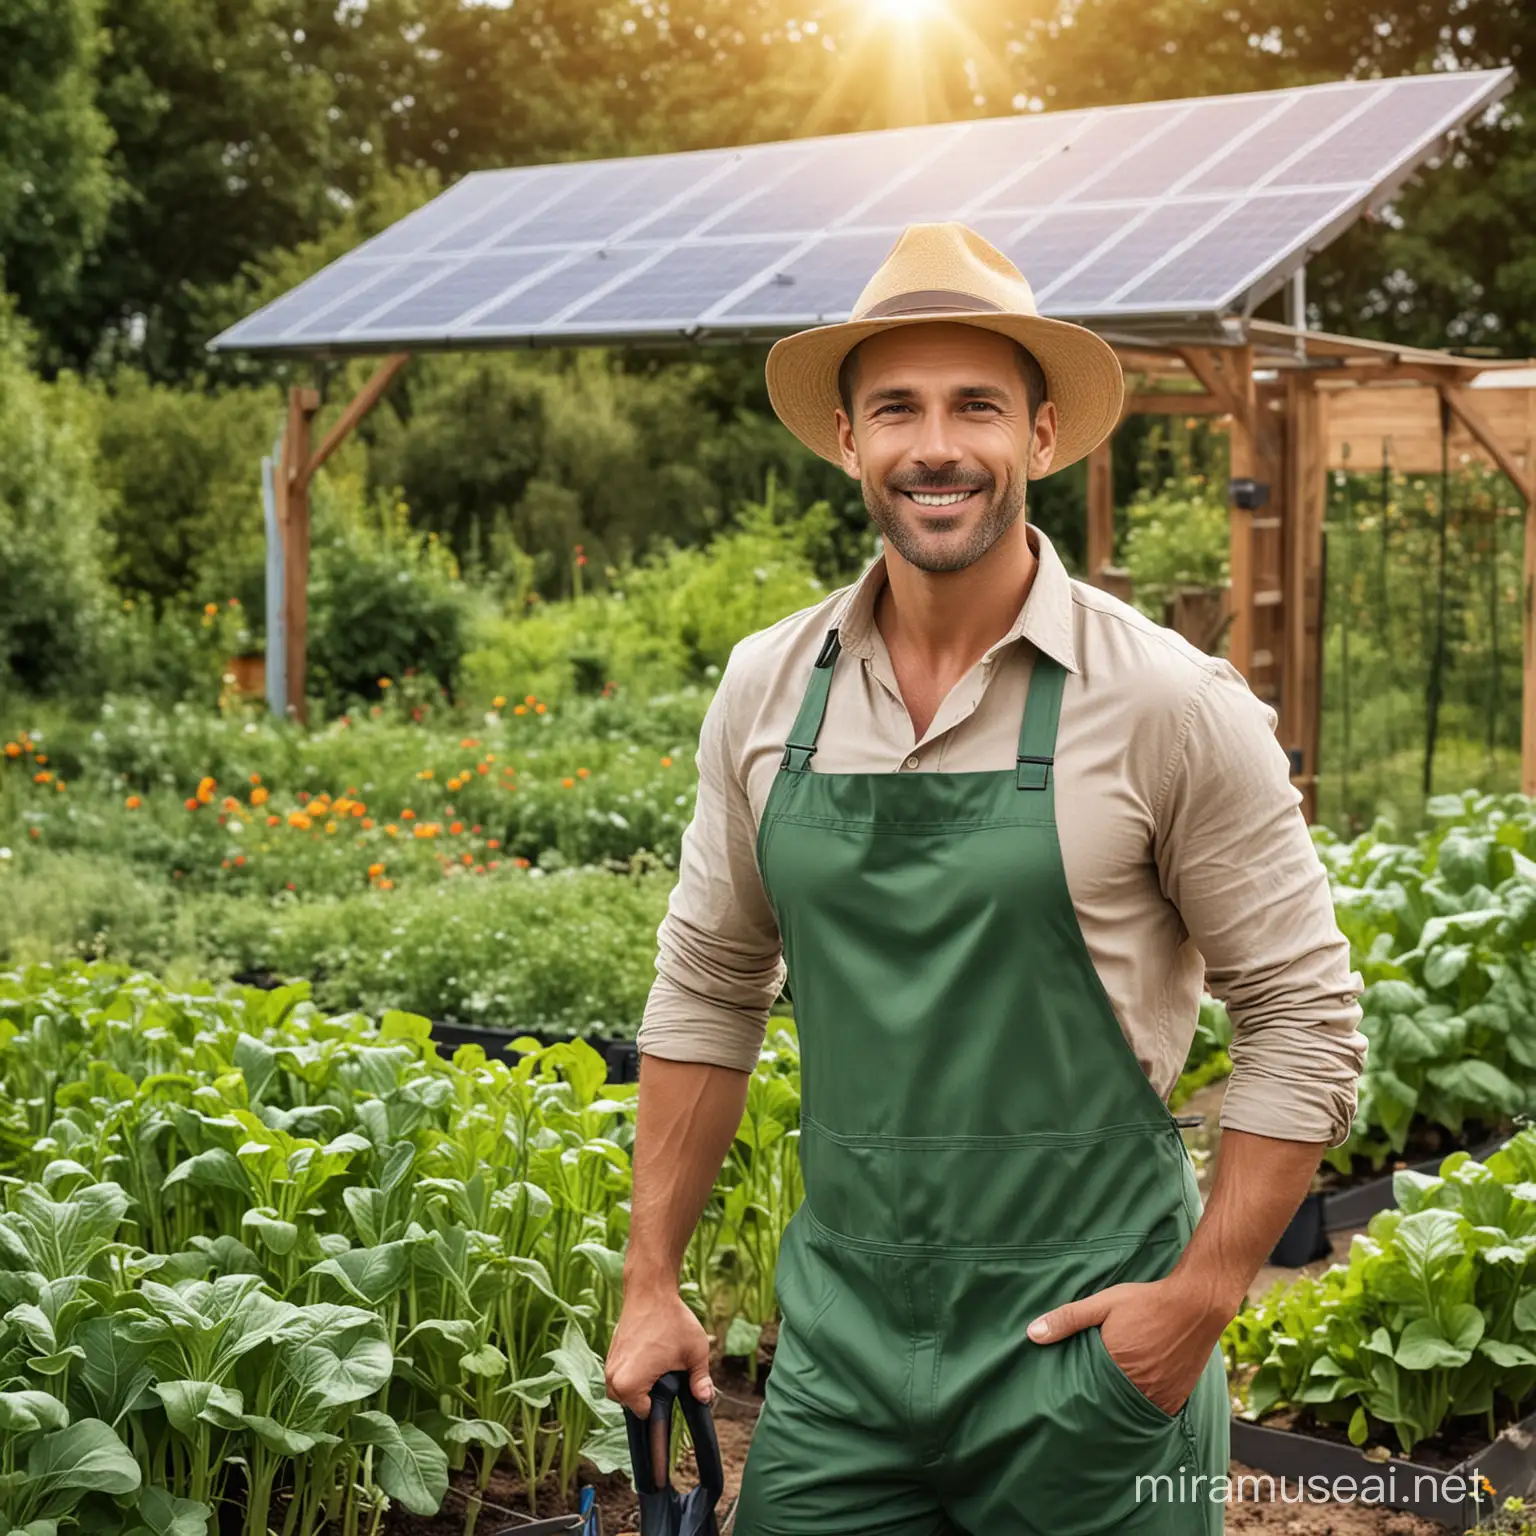 Stylish Gardener Tending to SolarPowered Vegetable Garden